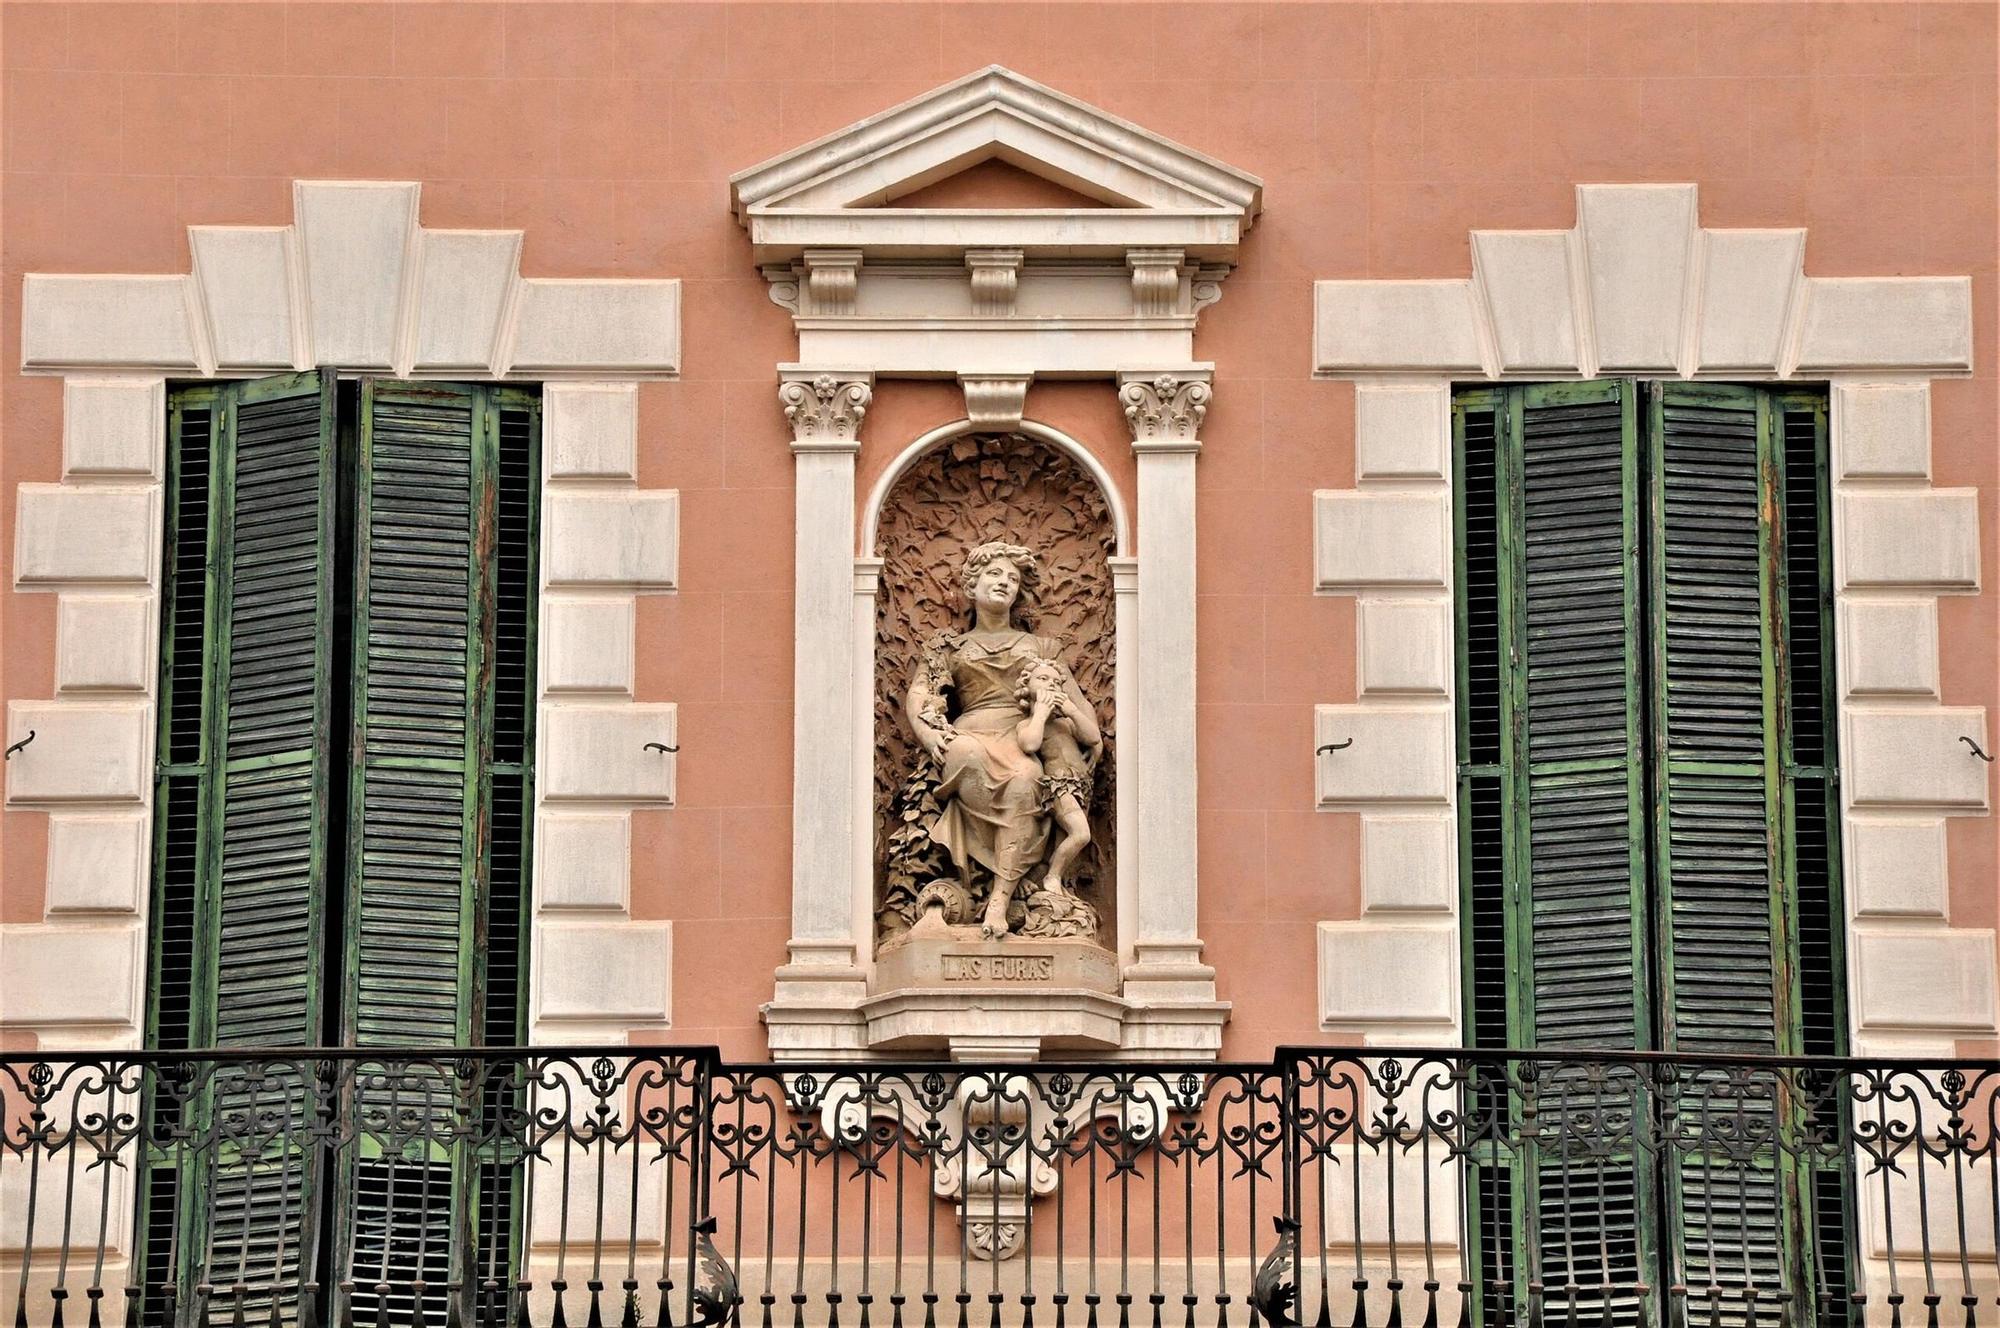 Escultura alegórica de la fachada